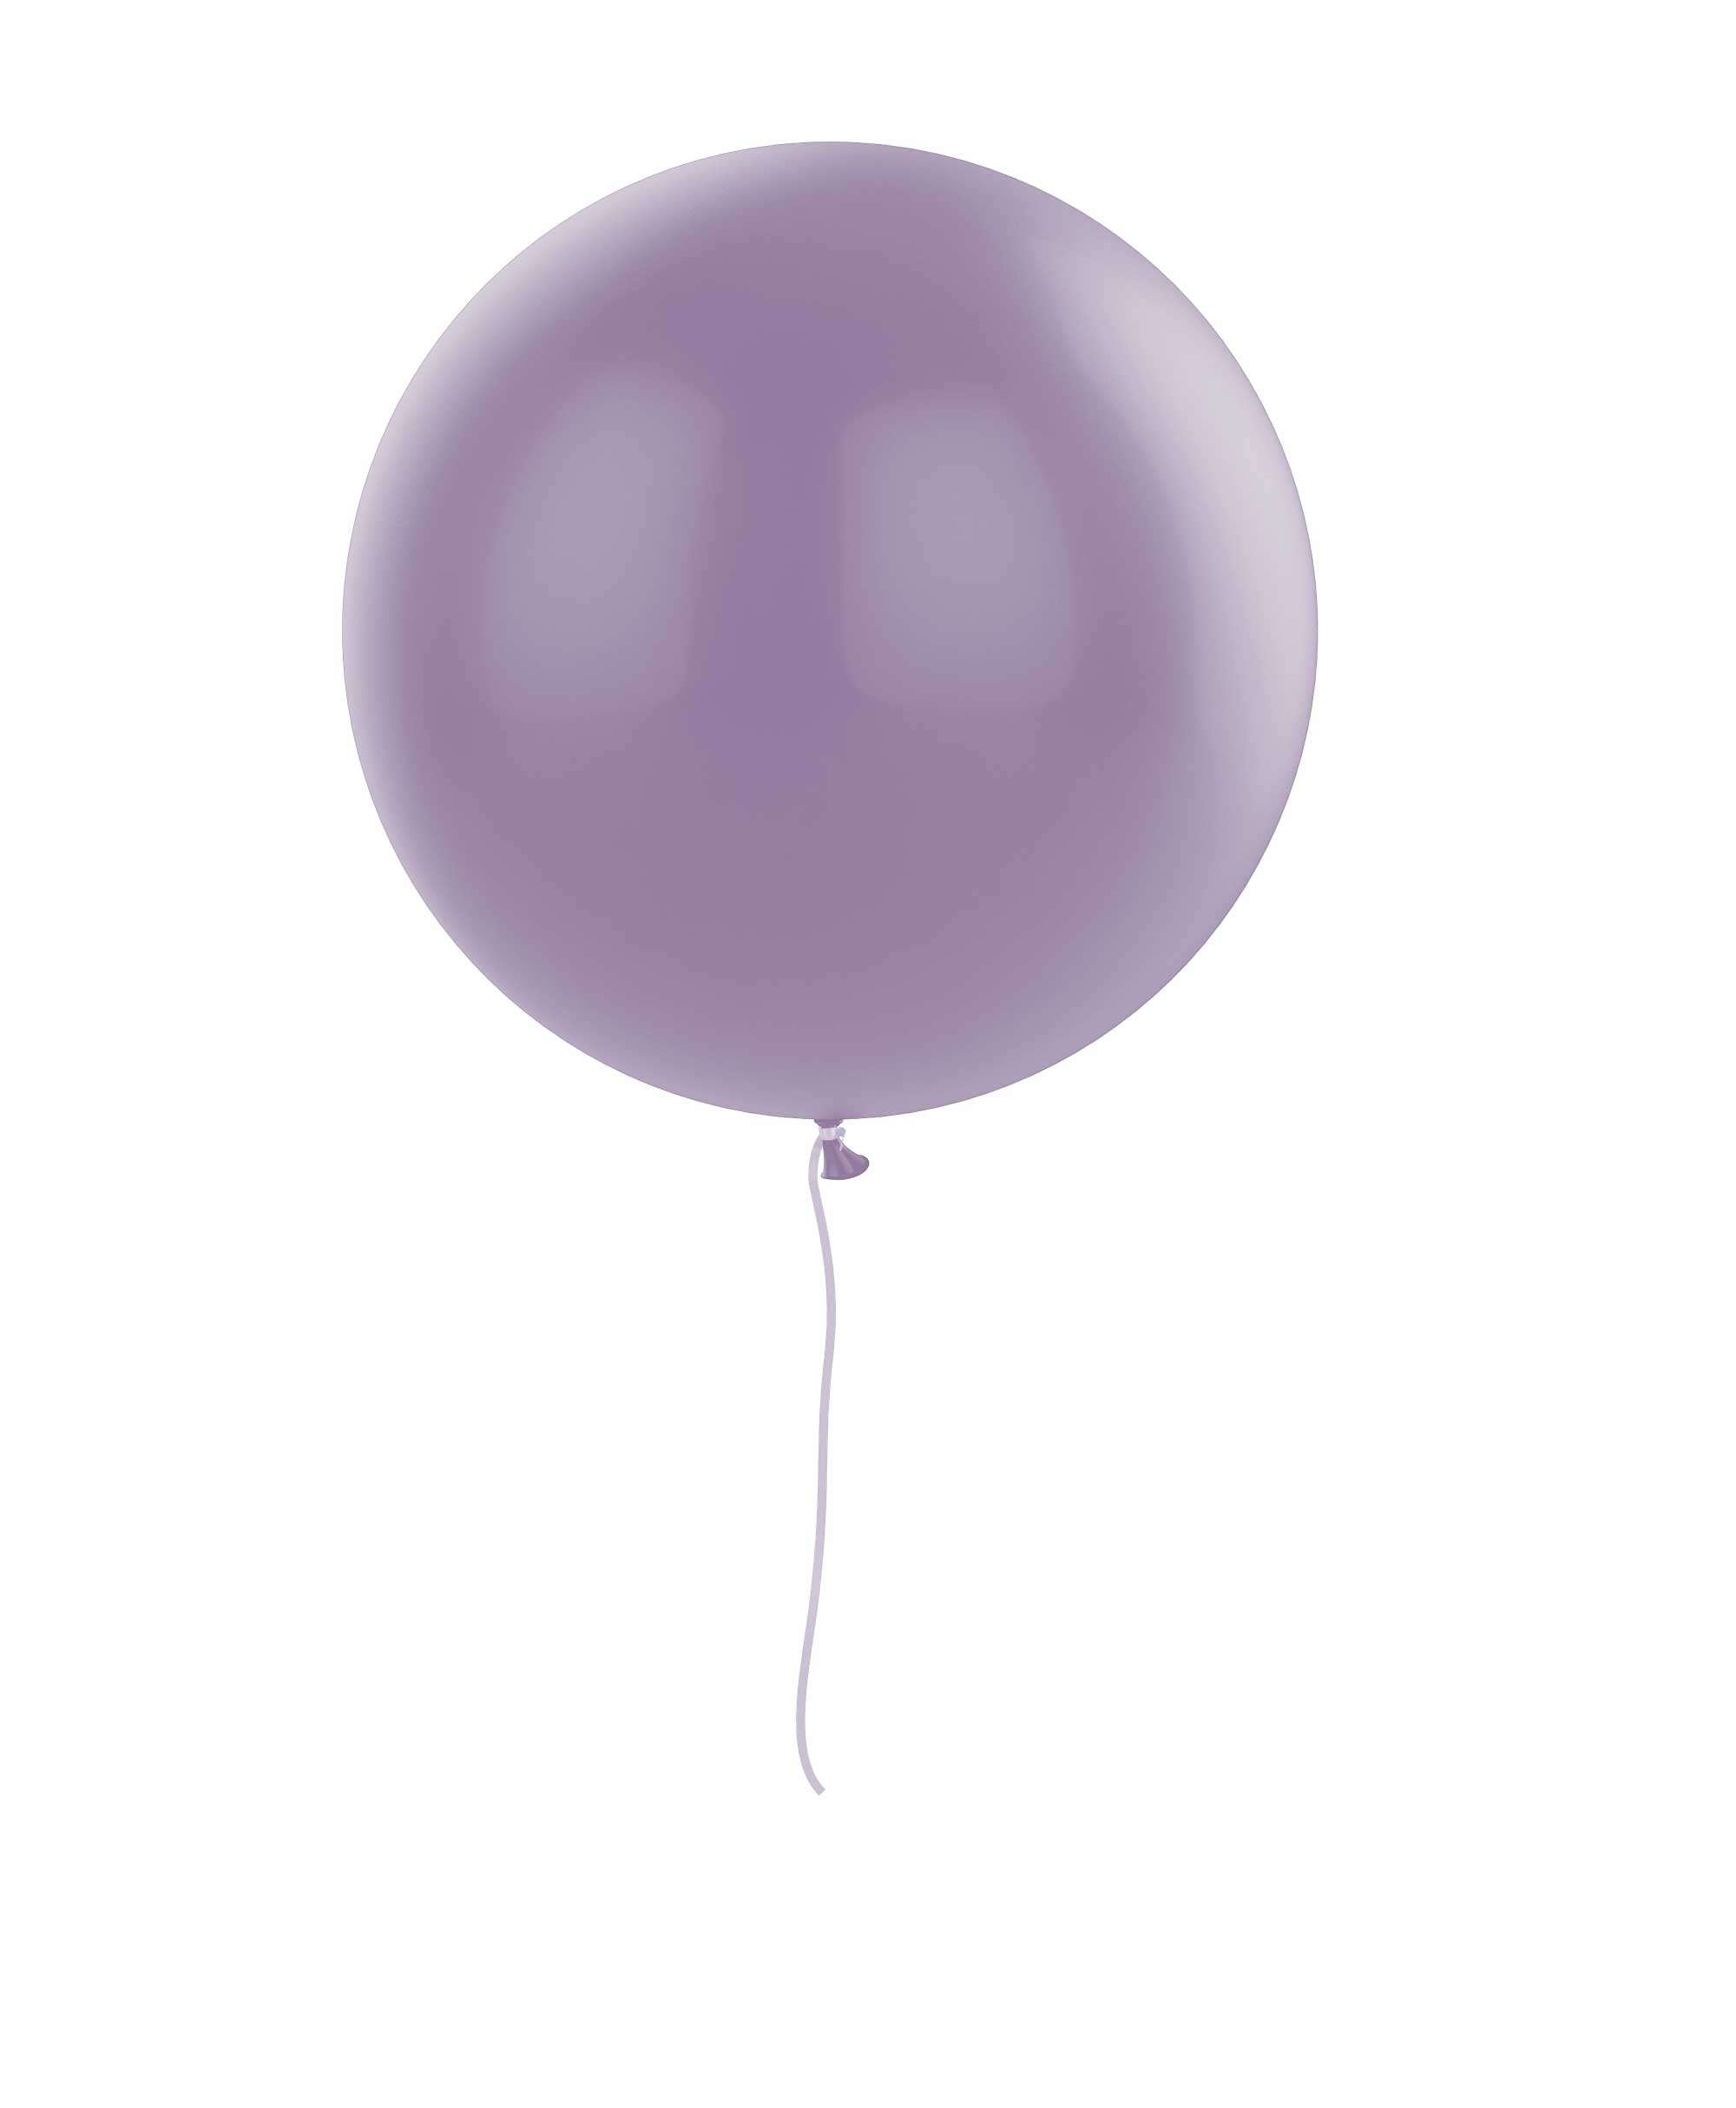 Lilac balloon 36" - Plum theme